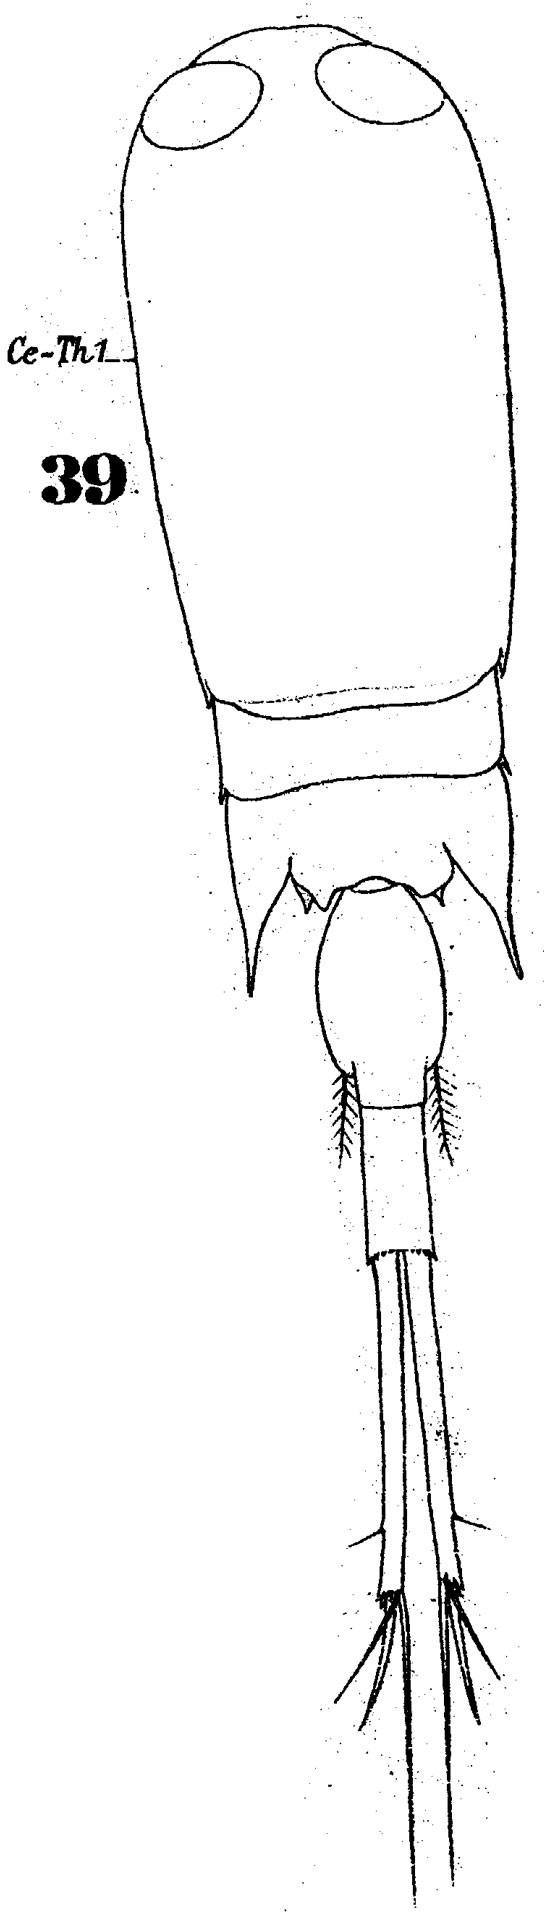 Species Corycaeus (Corycaeus) speciosus - Plate 6 of morphological figures